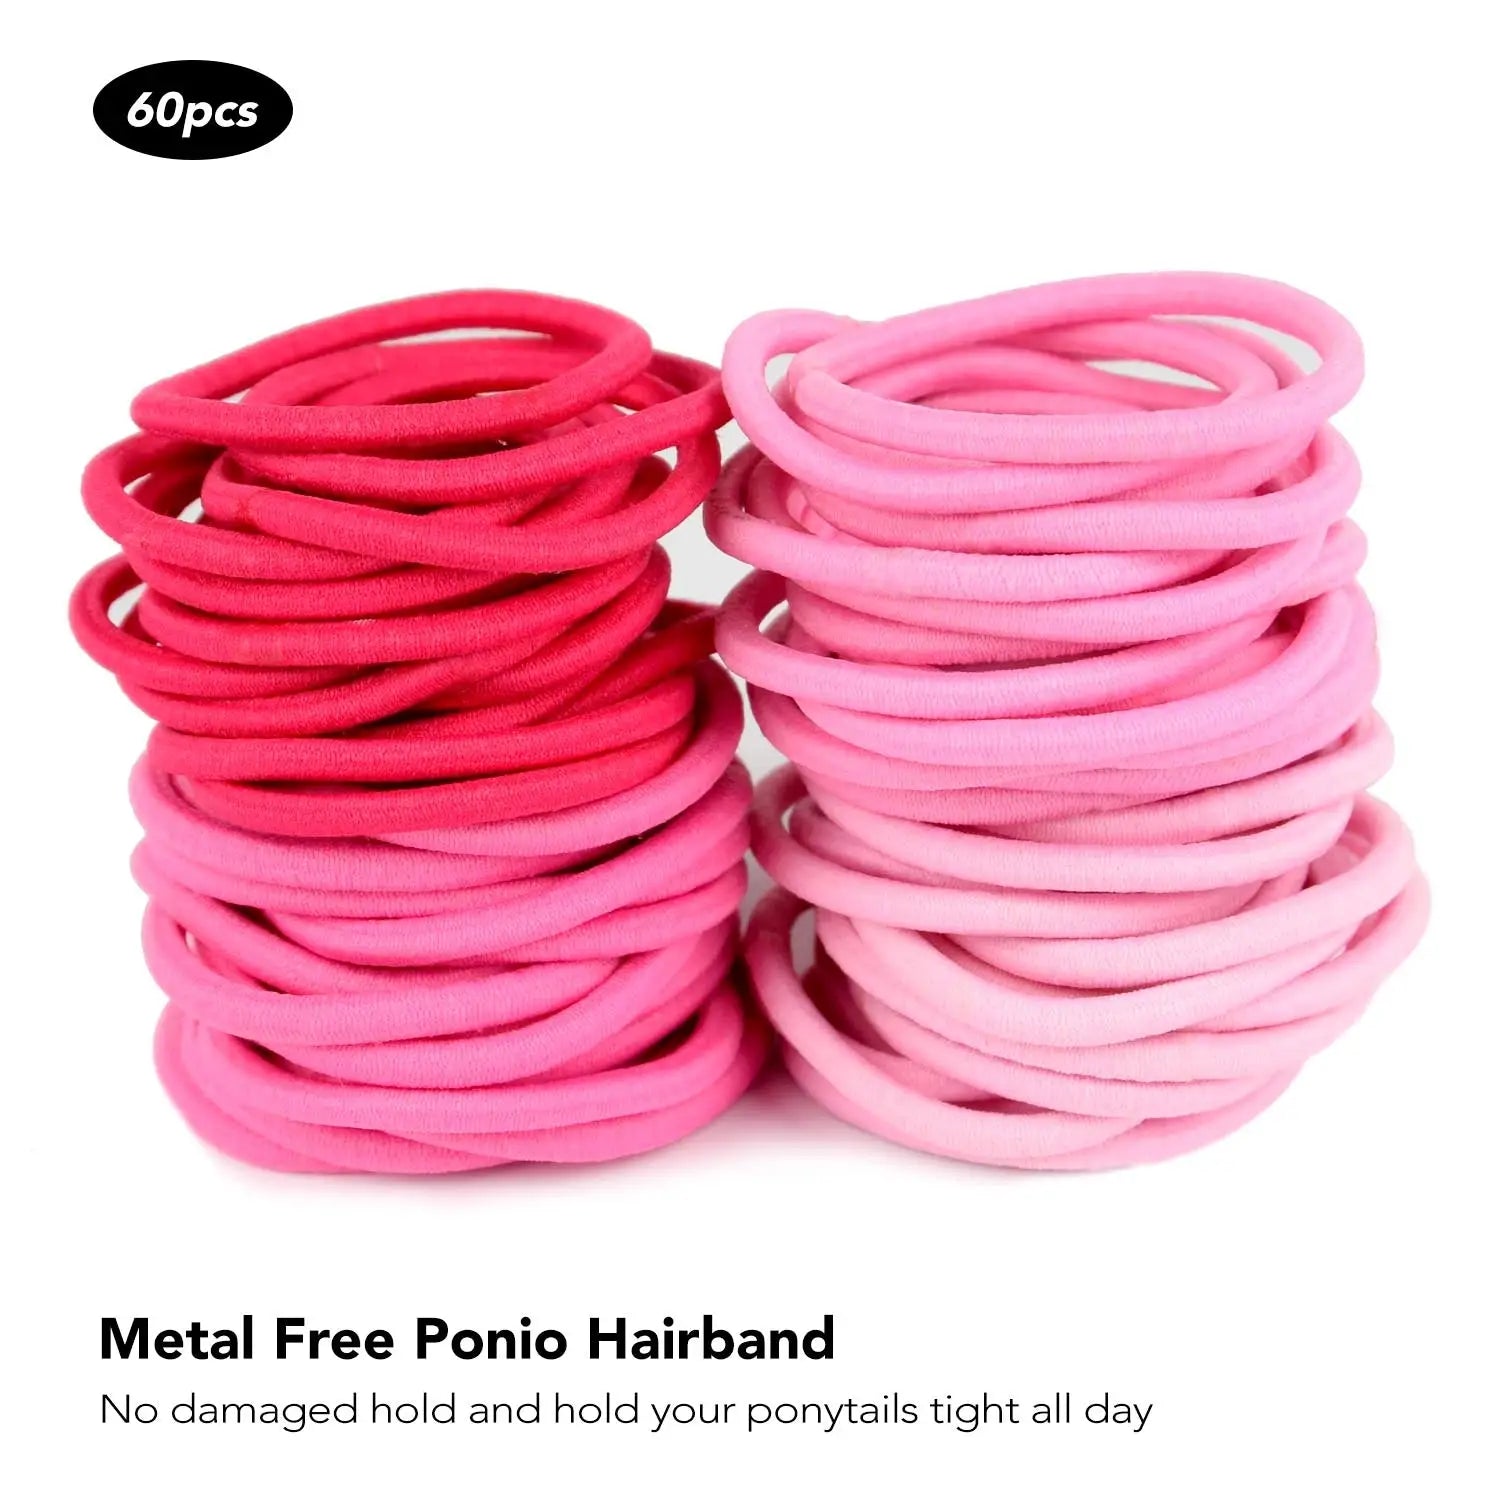 Pink soft elastic hair bands, metal free hairband alternative, 3mm hair ties - Ponytail holders, 60 pieces